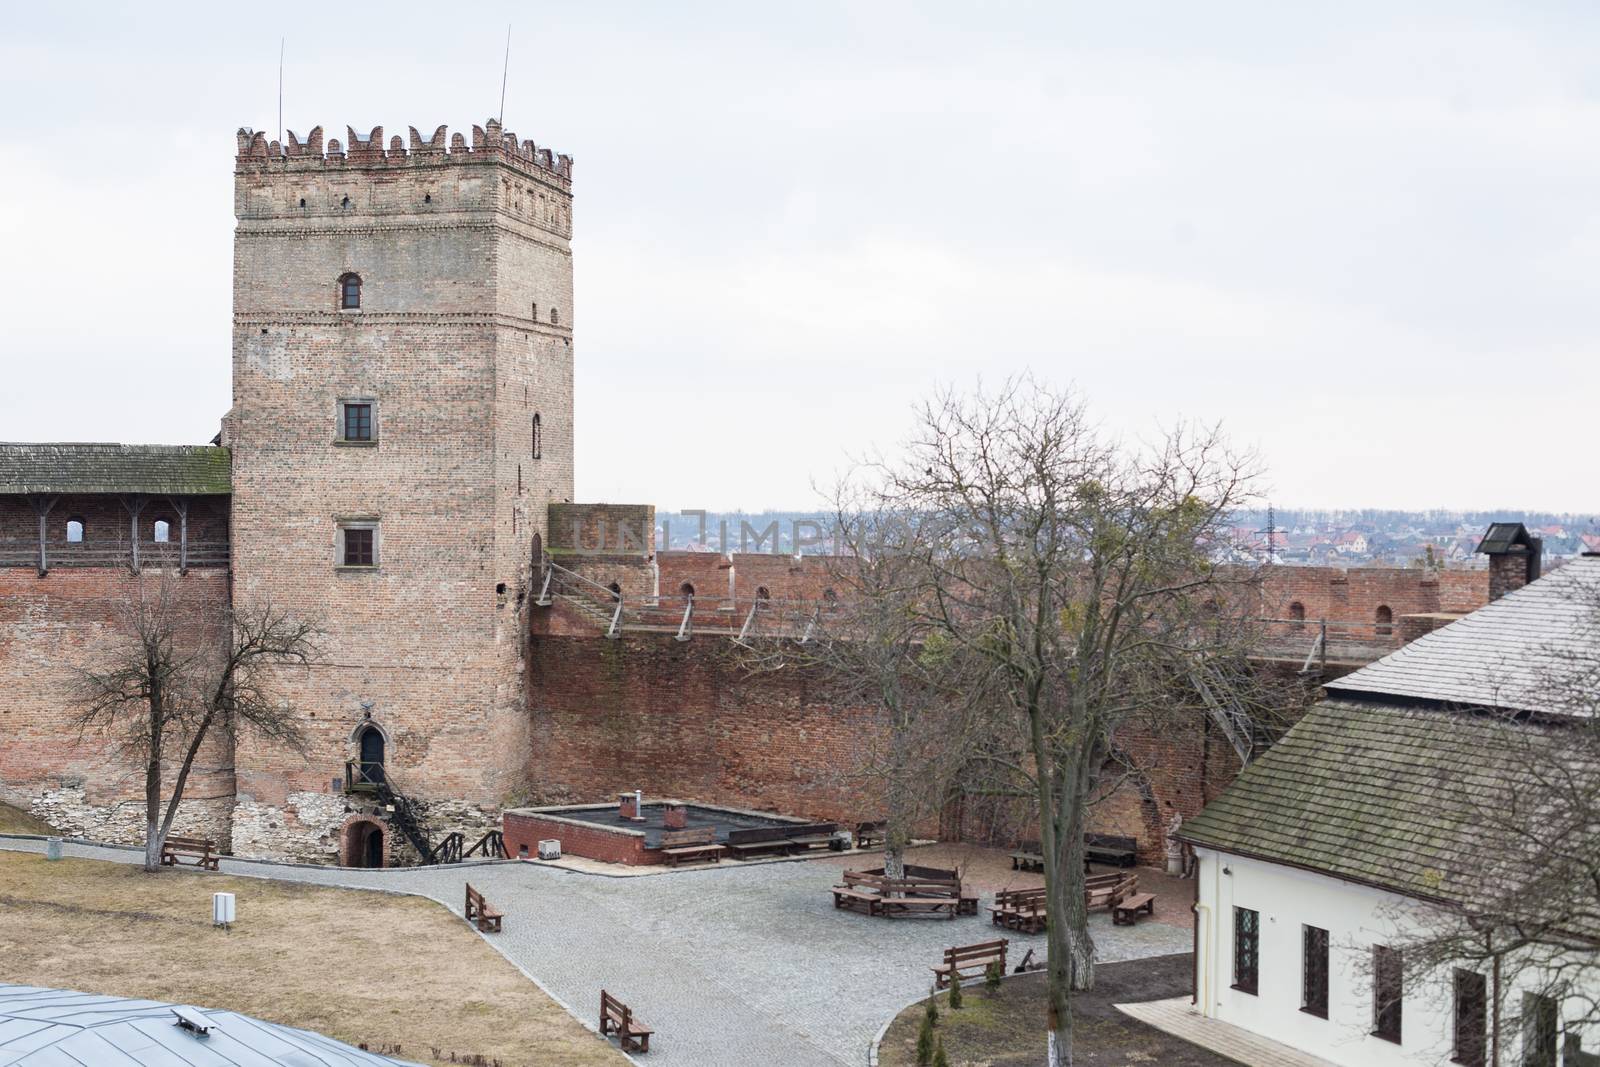 Area of old Lubart castle in Lutsk Ukraine by Vanzyst